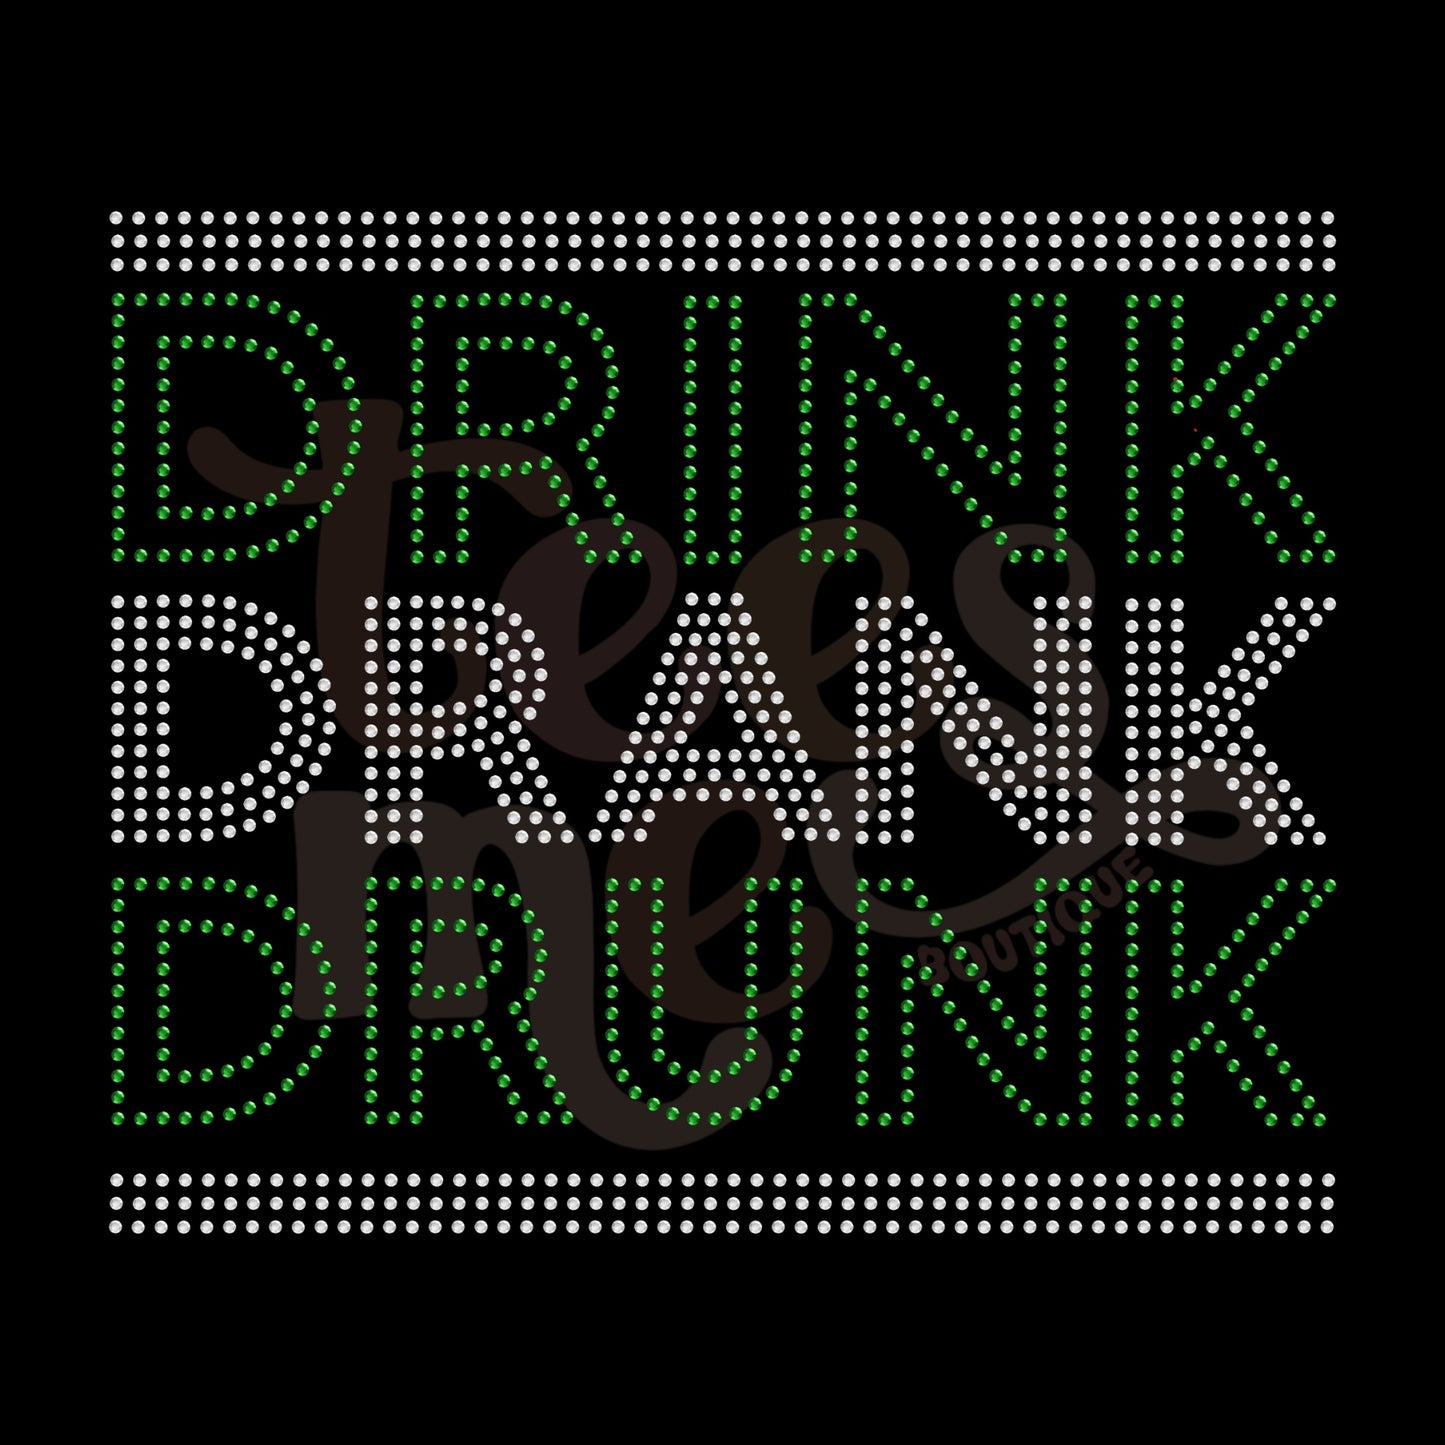 Drink Drank Drunk RHINESTONE TRANSFER